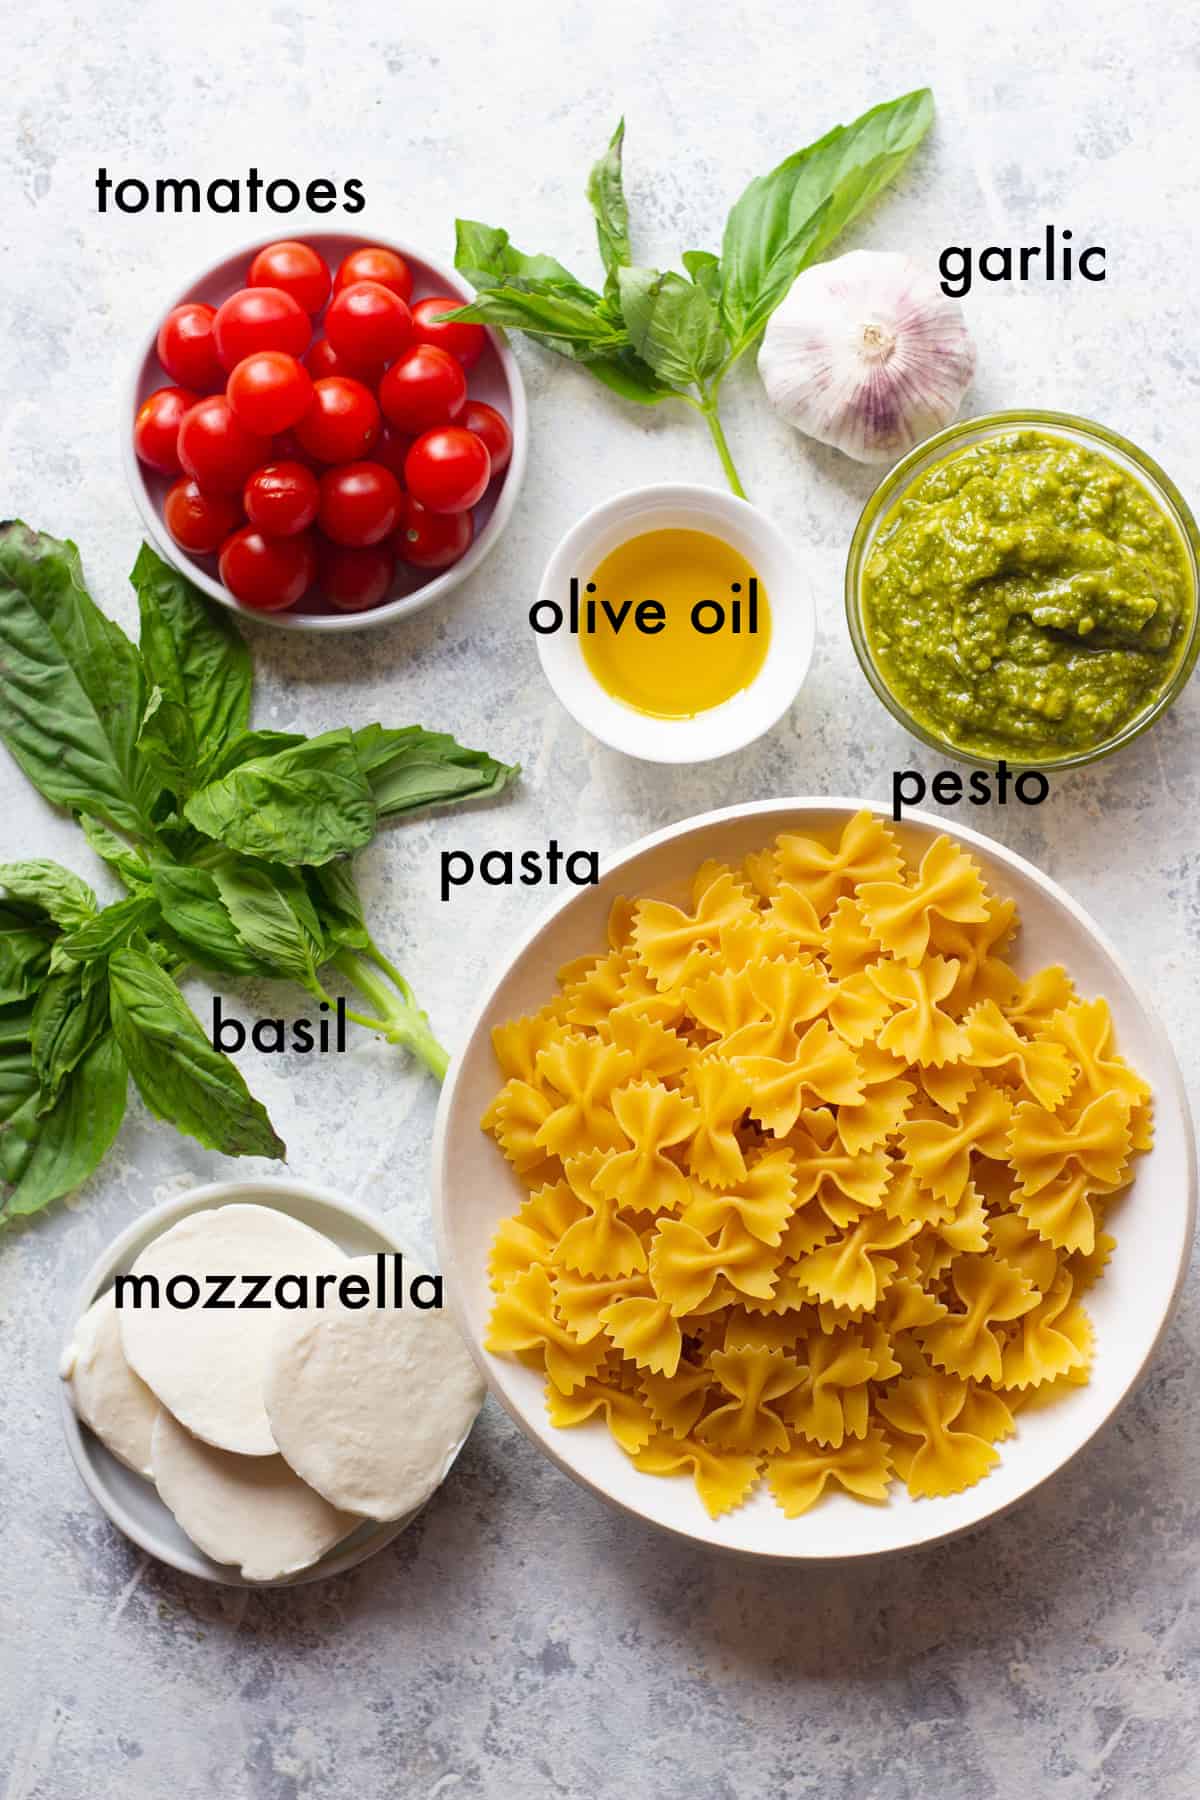 Caprese pasta salad ingredients: pasta, mozzarella, tomatoes, basil, olive oil, garlic, pesto.